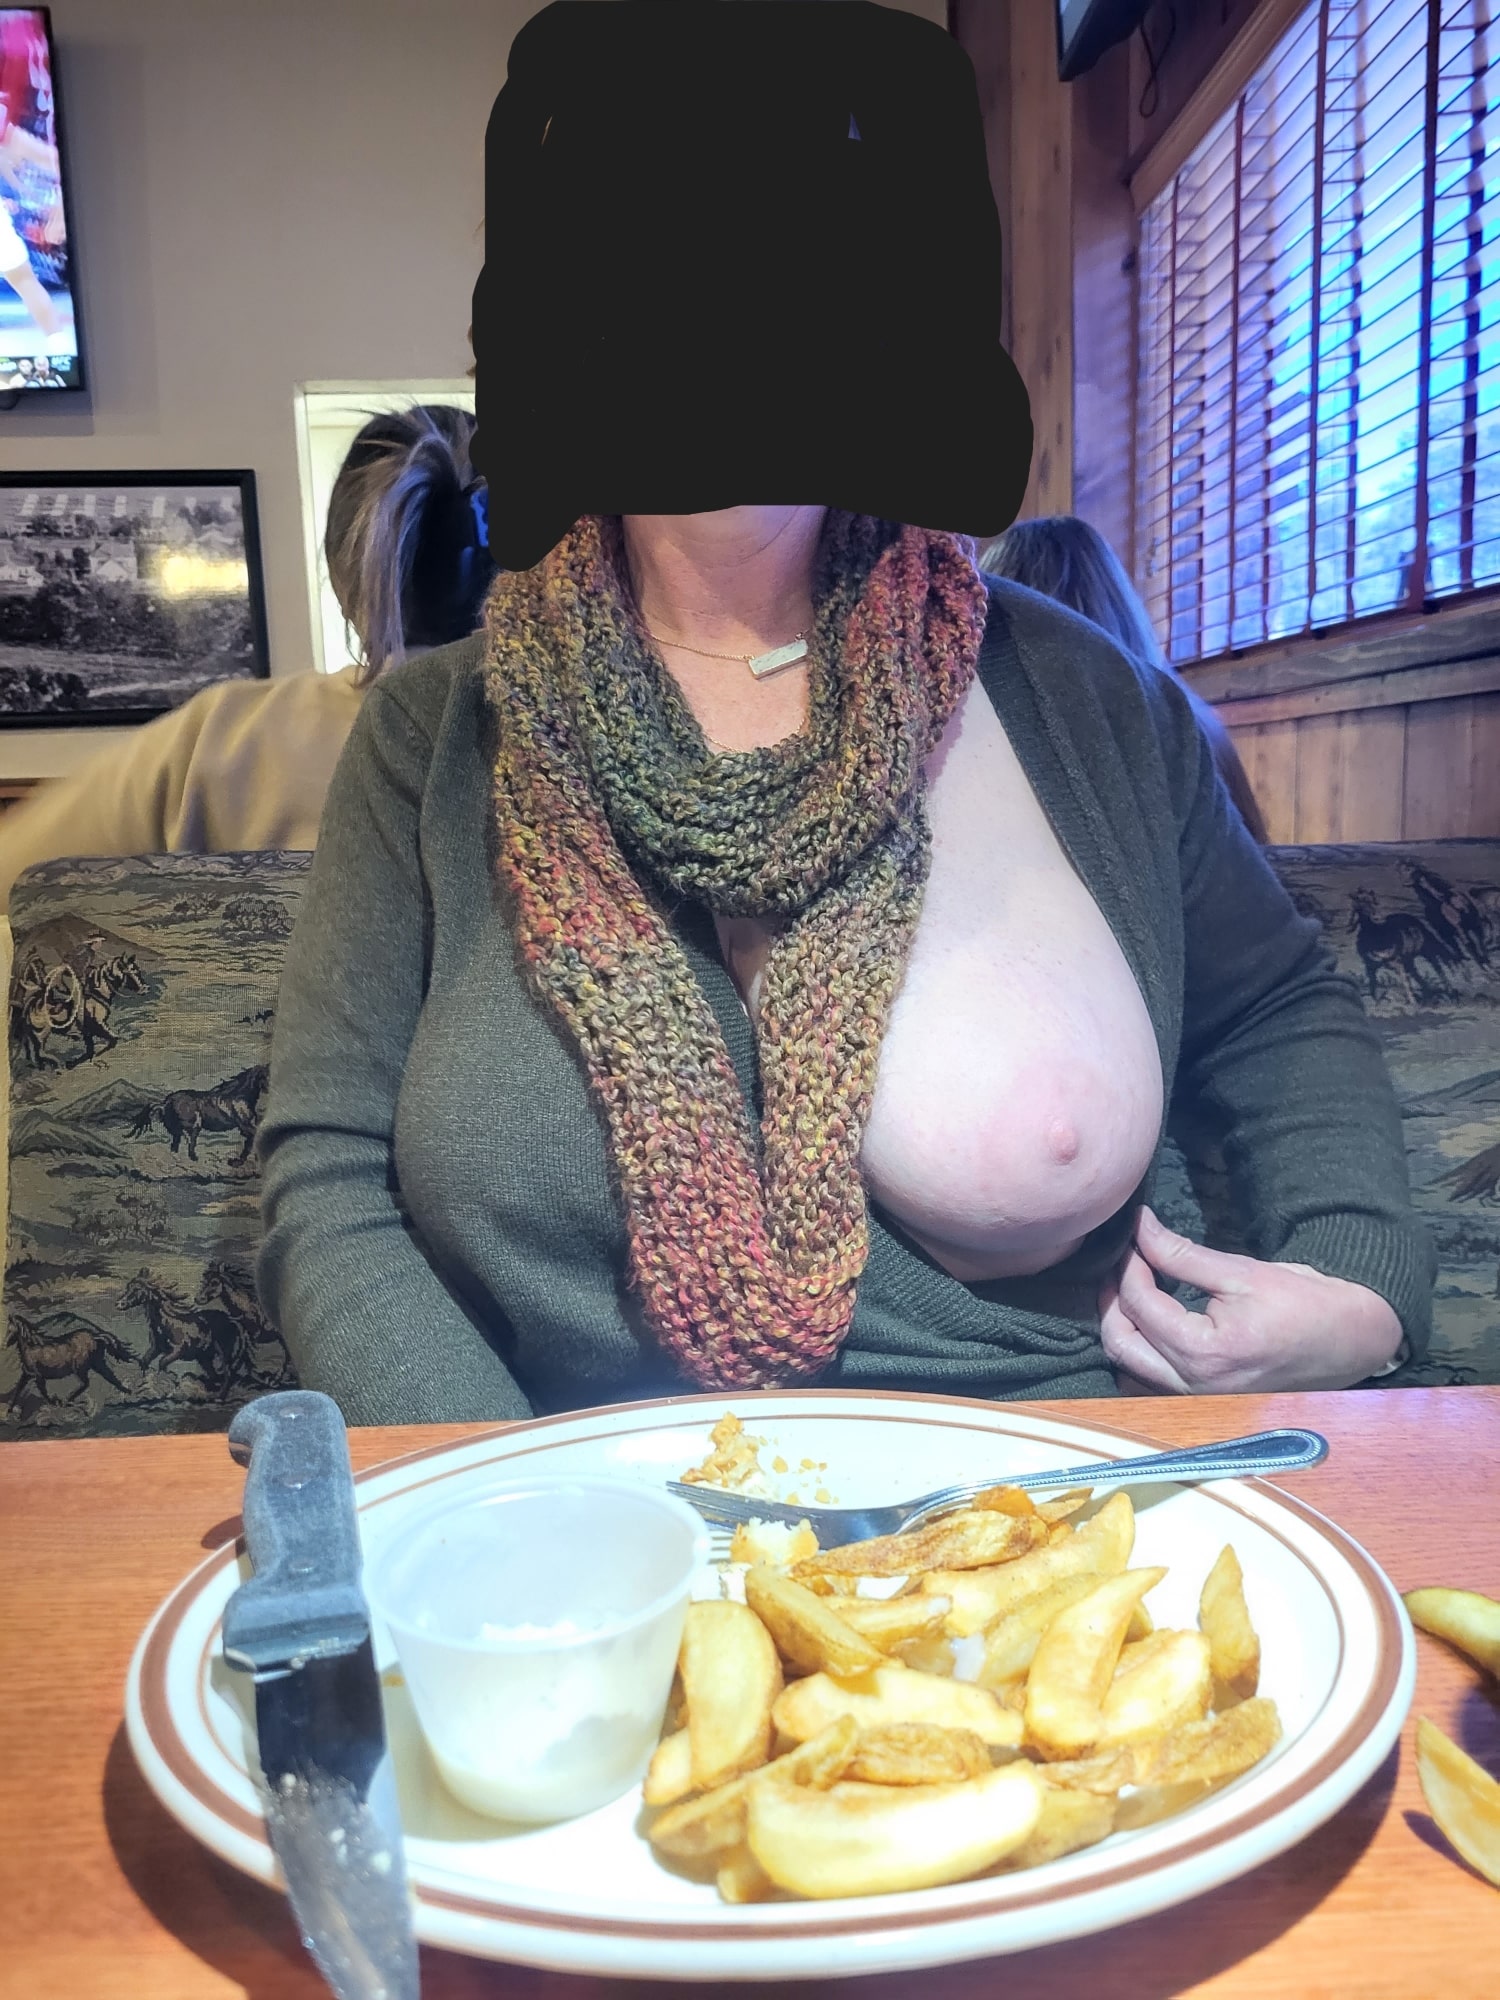 Real Amateurs Public Flashing Pics Mature Flashing Pics Boobs Flash Pics - Flashing massive boob in the restaurant